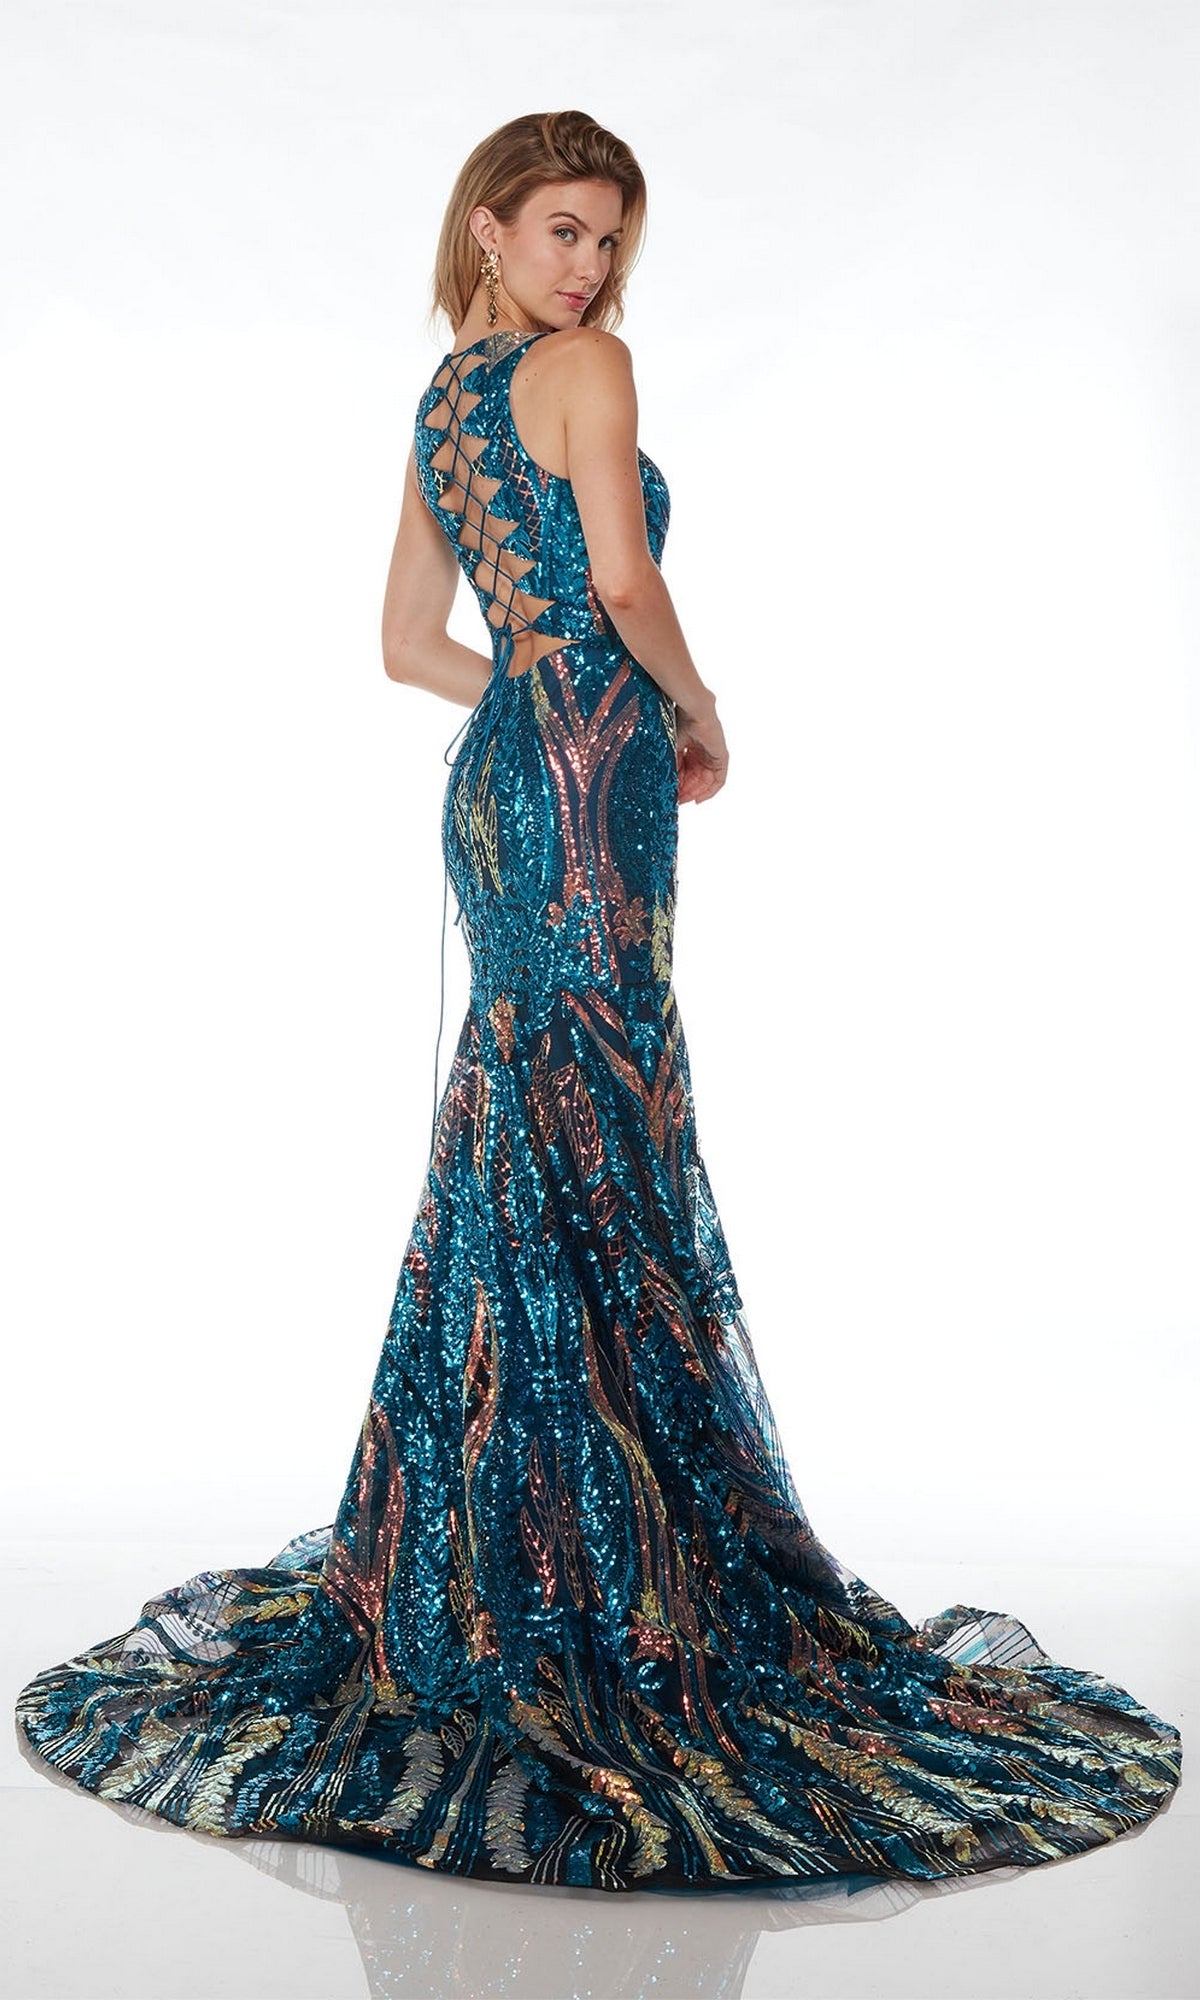 Long Prom Dress 61657 by Alyce